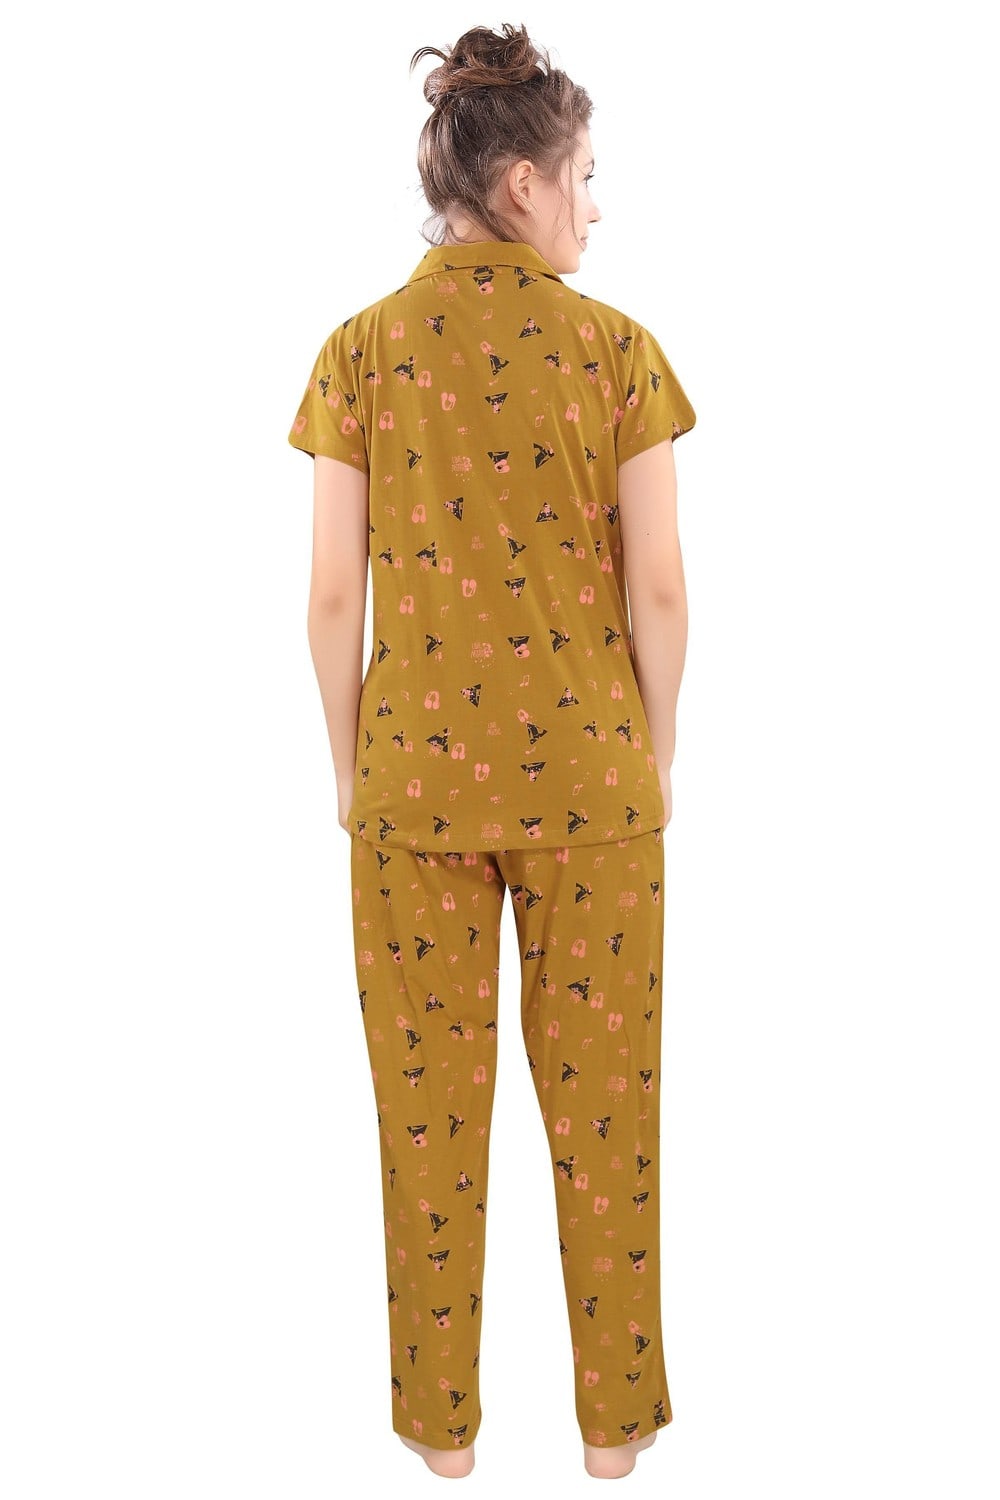 Pierre Donna Women's Cotton Pajama set With Pants - Women Sleepwear Golden  Color